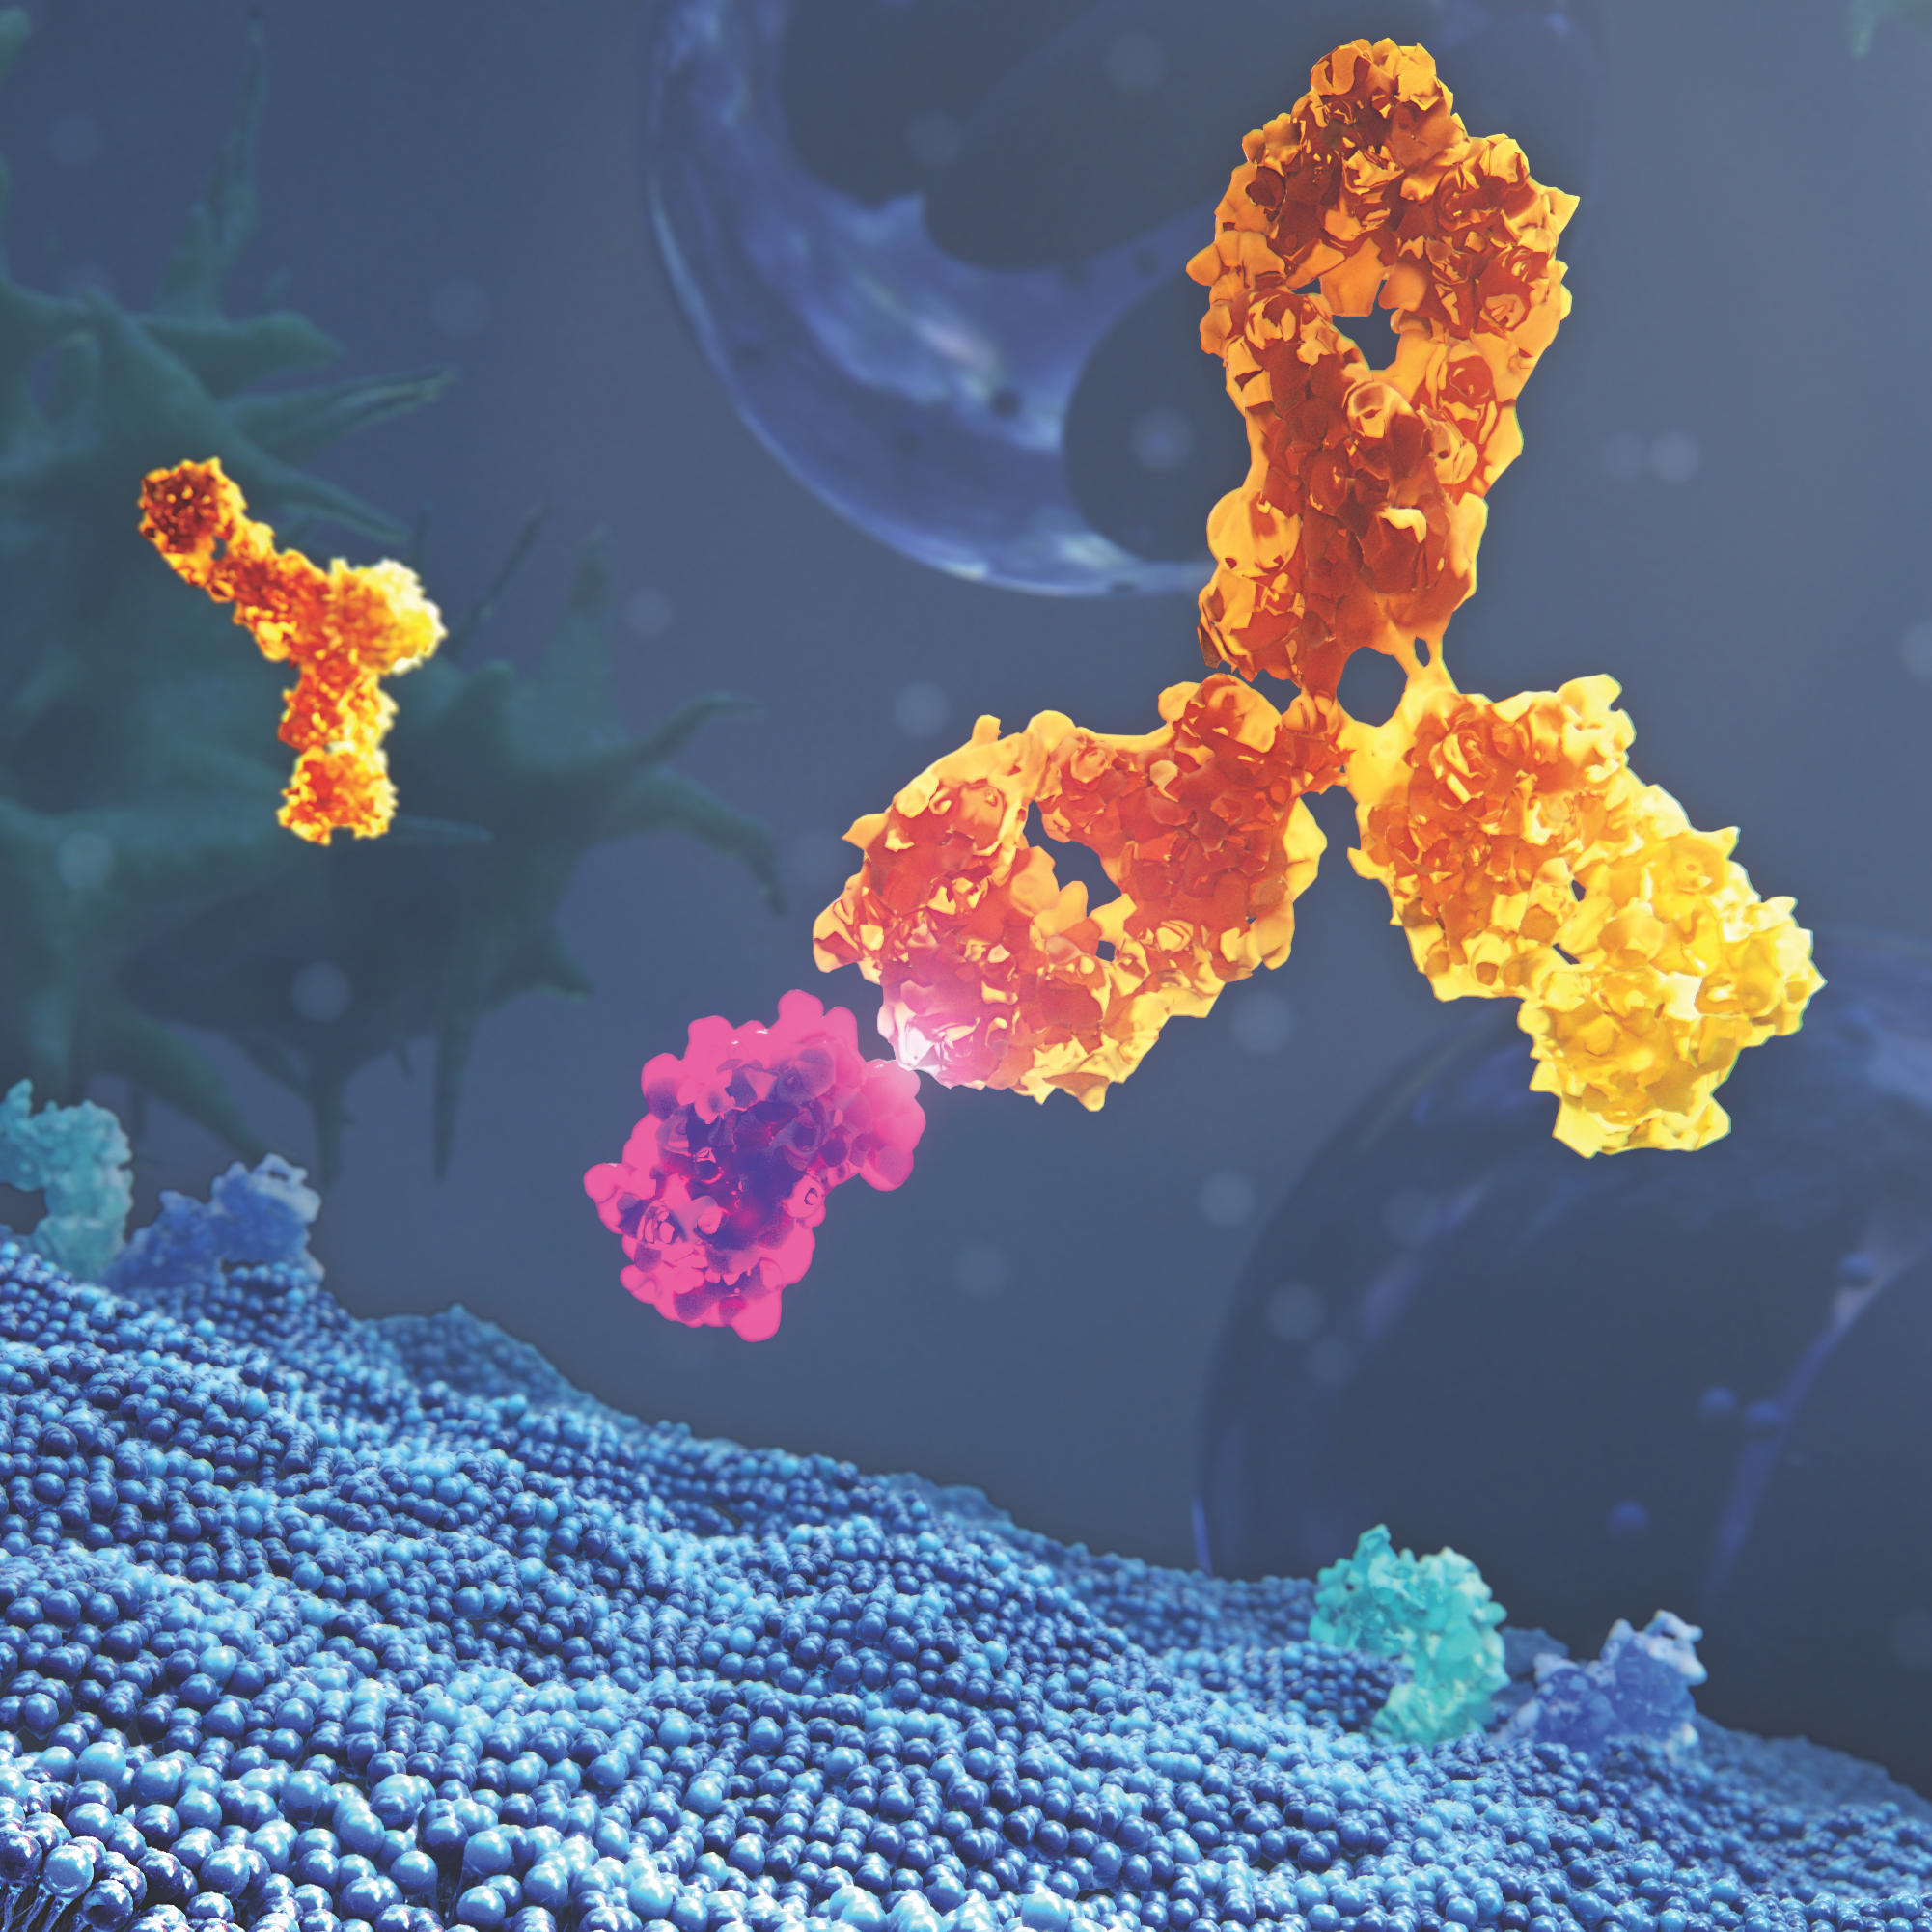 AZ1903 RIA Antibody that binds to upstream epithelial cytokines-1